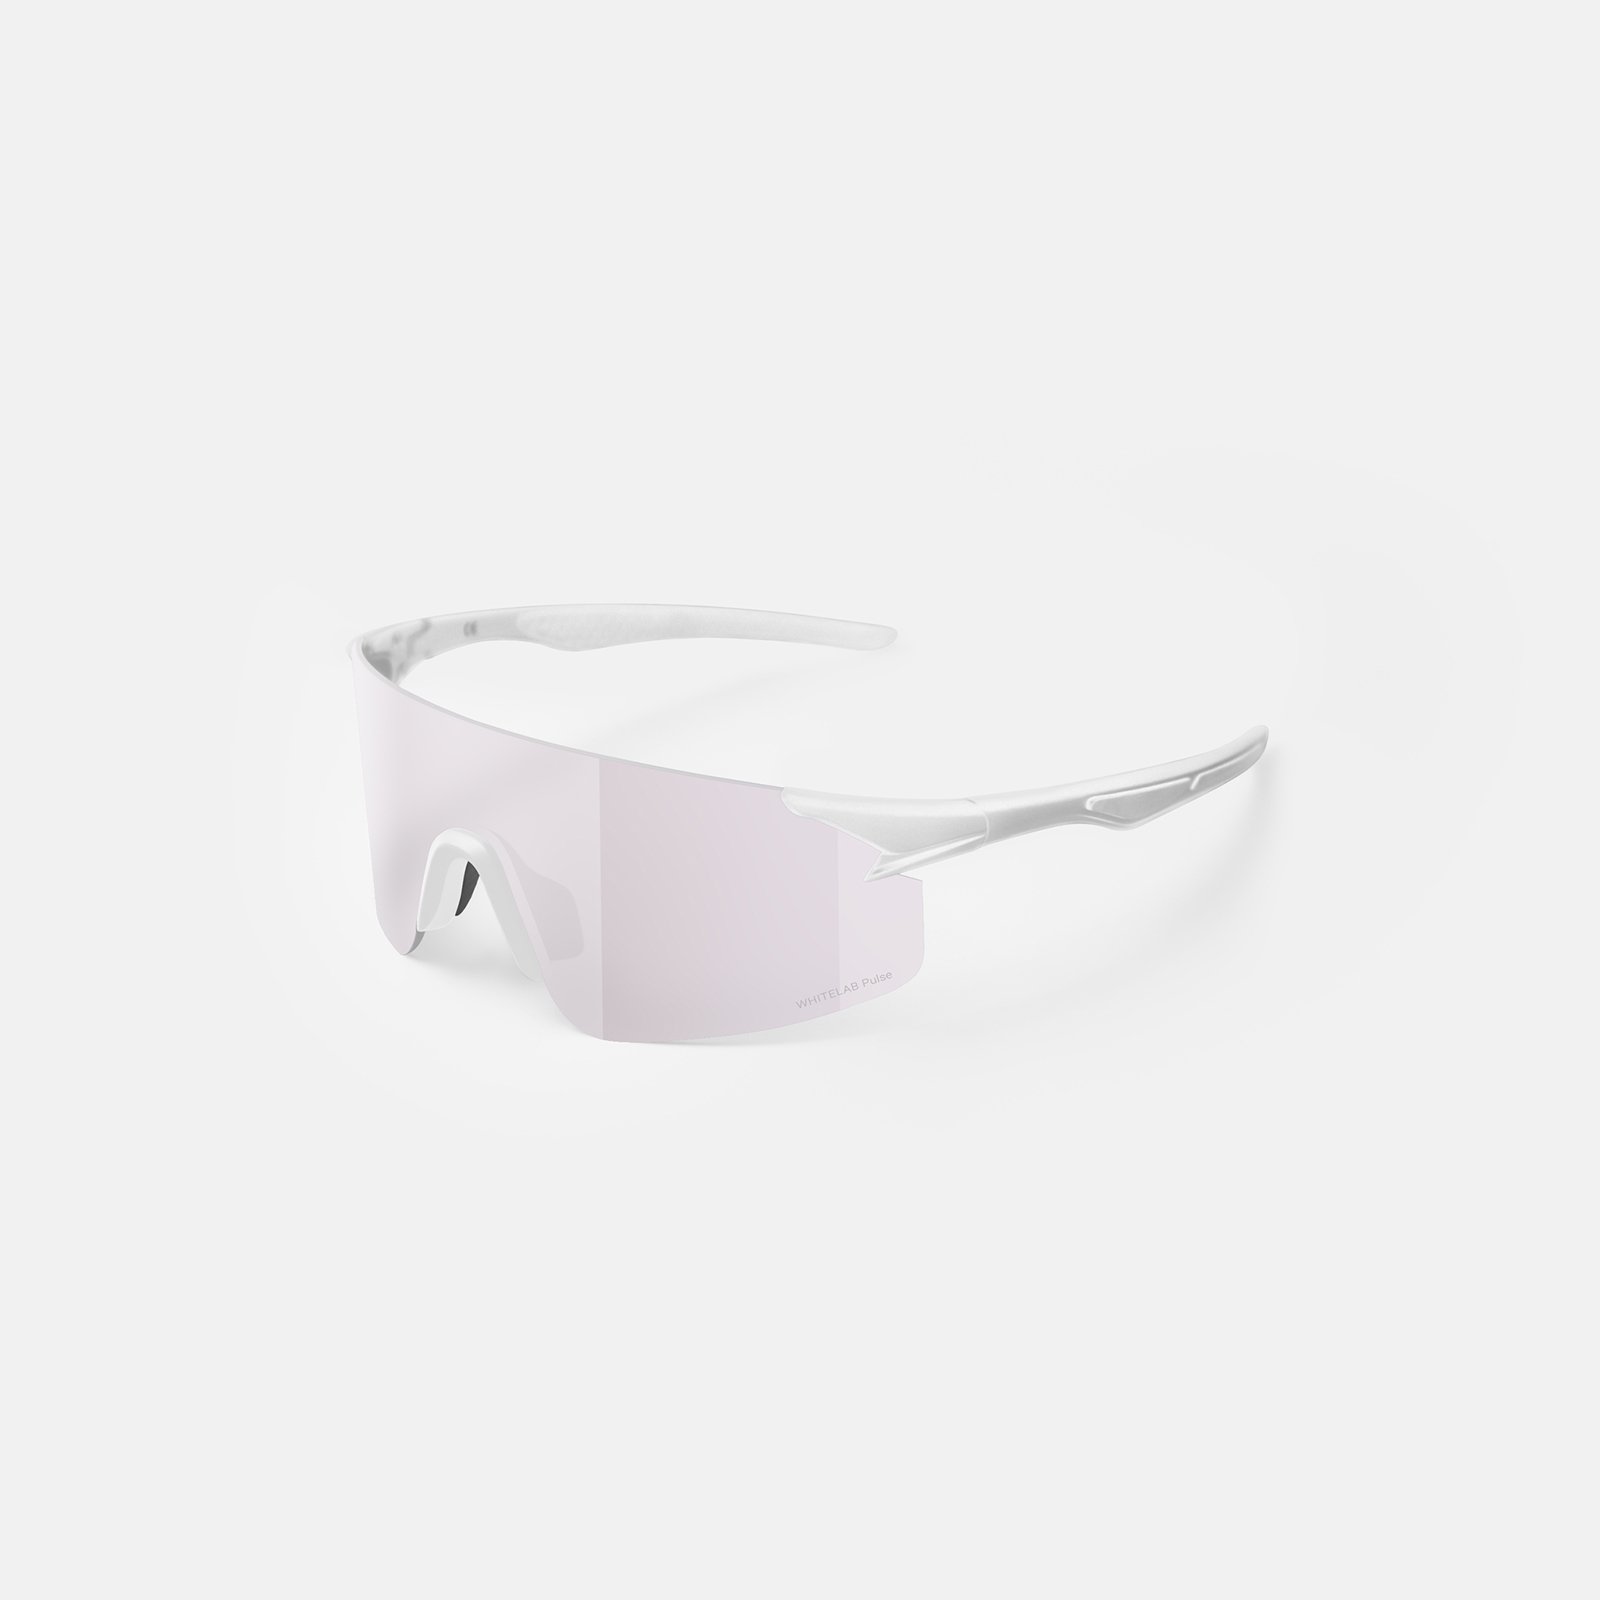  черные солнцезащитные очки White Lab Visor Visor white/black - цена, описание, фото 3